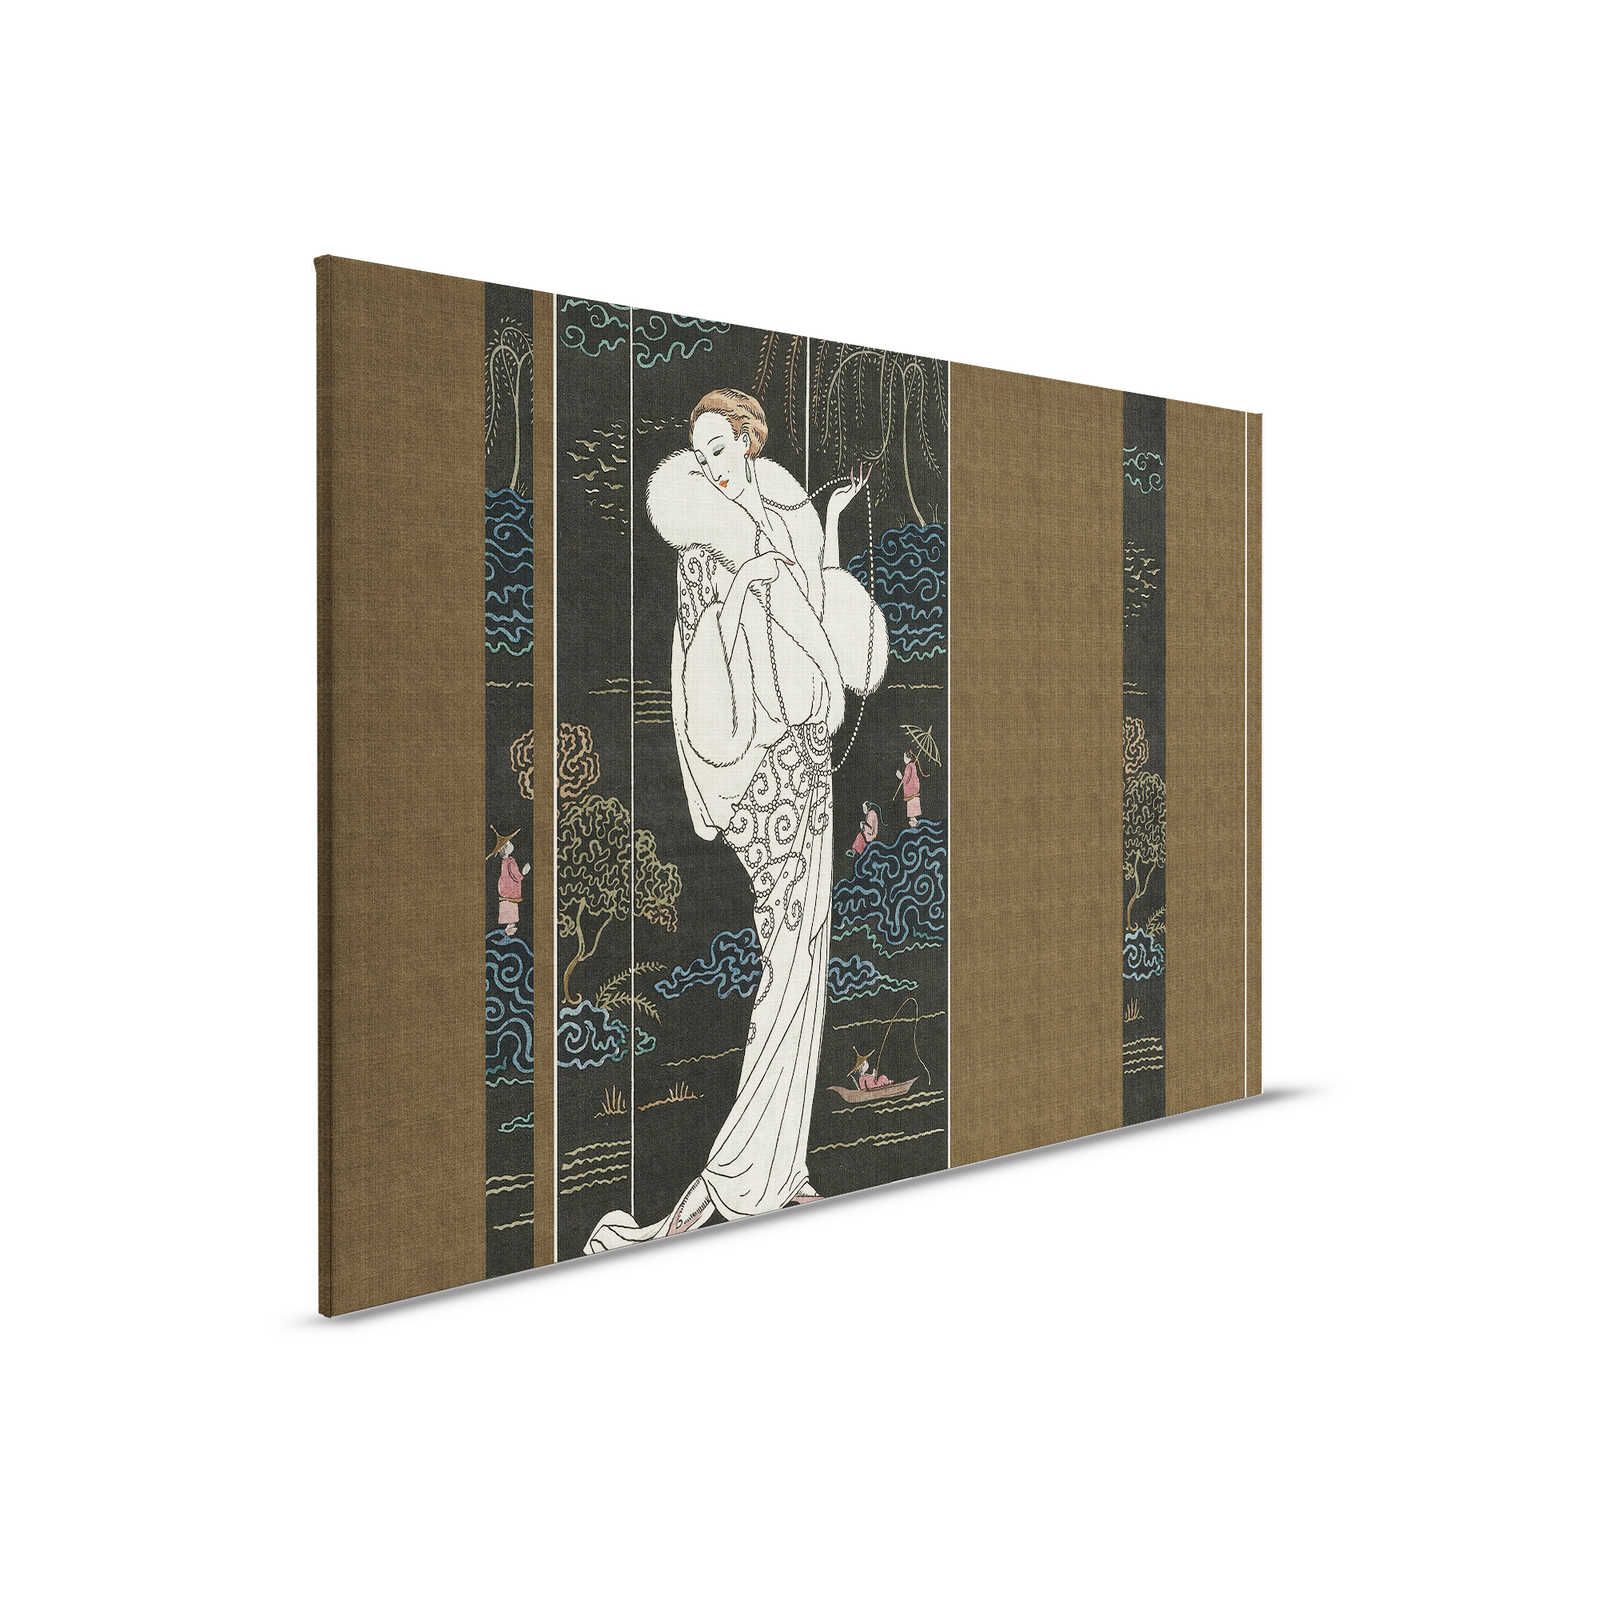         Adlon 4 - Canvas painting Black-Brown Asian Retro Design - 0,90 m x 0,60 m
    